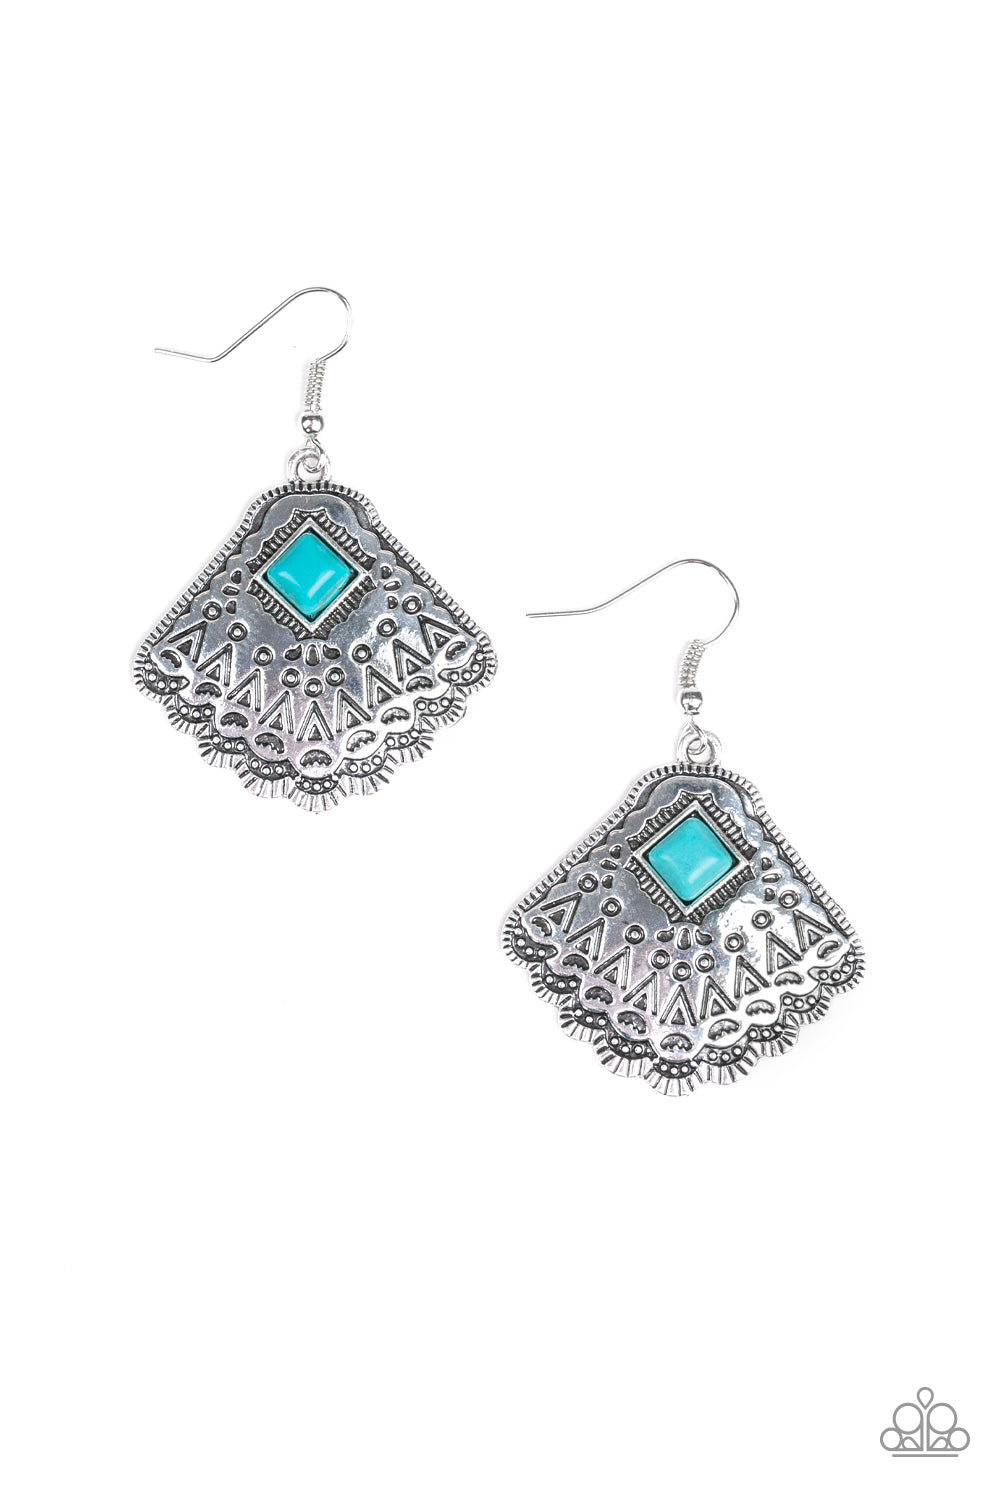 Mountain Mesa - Blue/Turquoise earrings